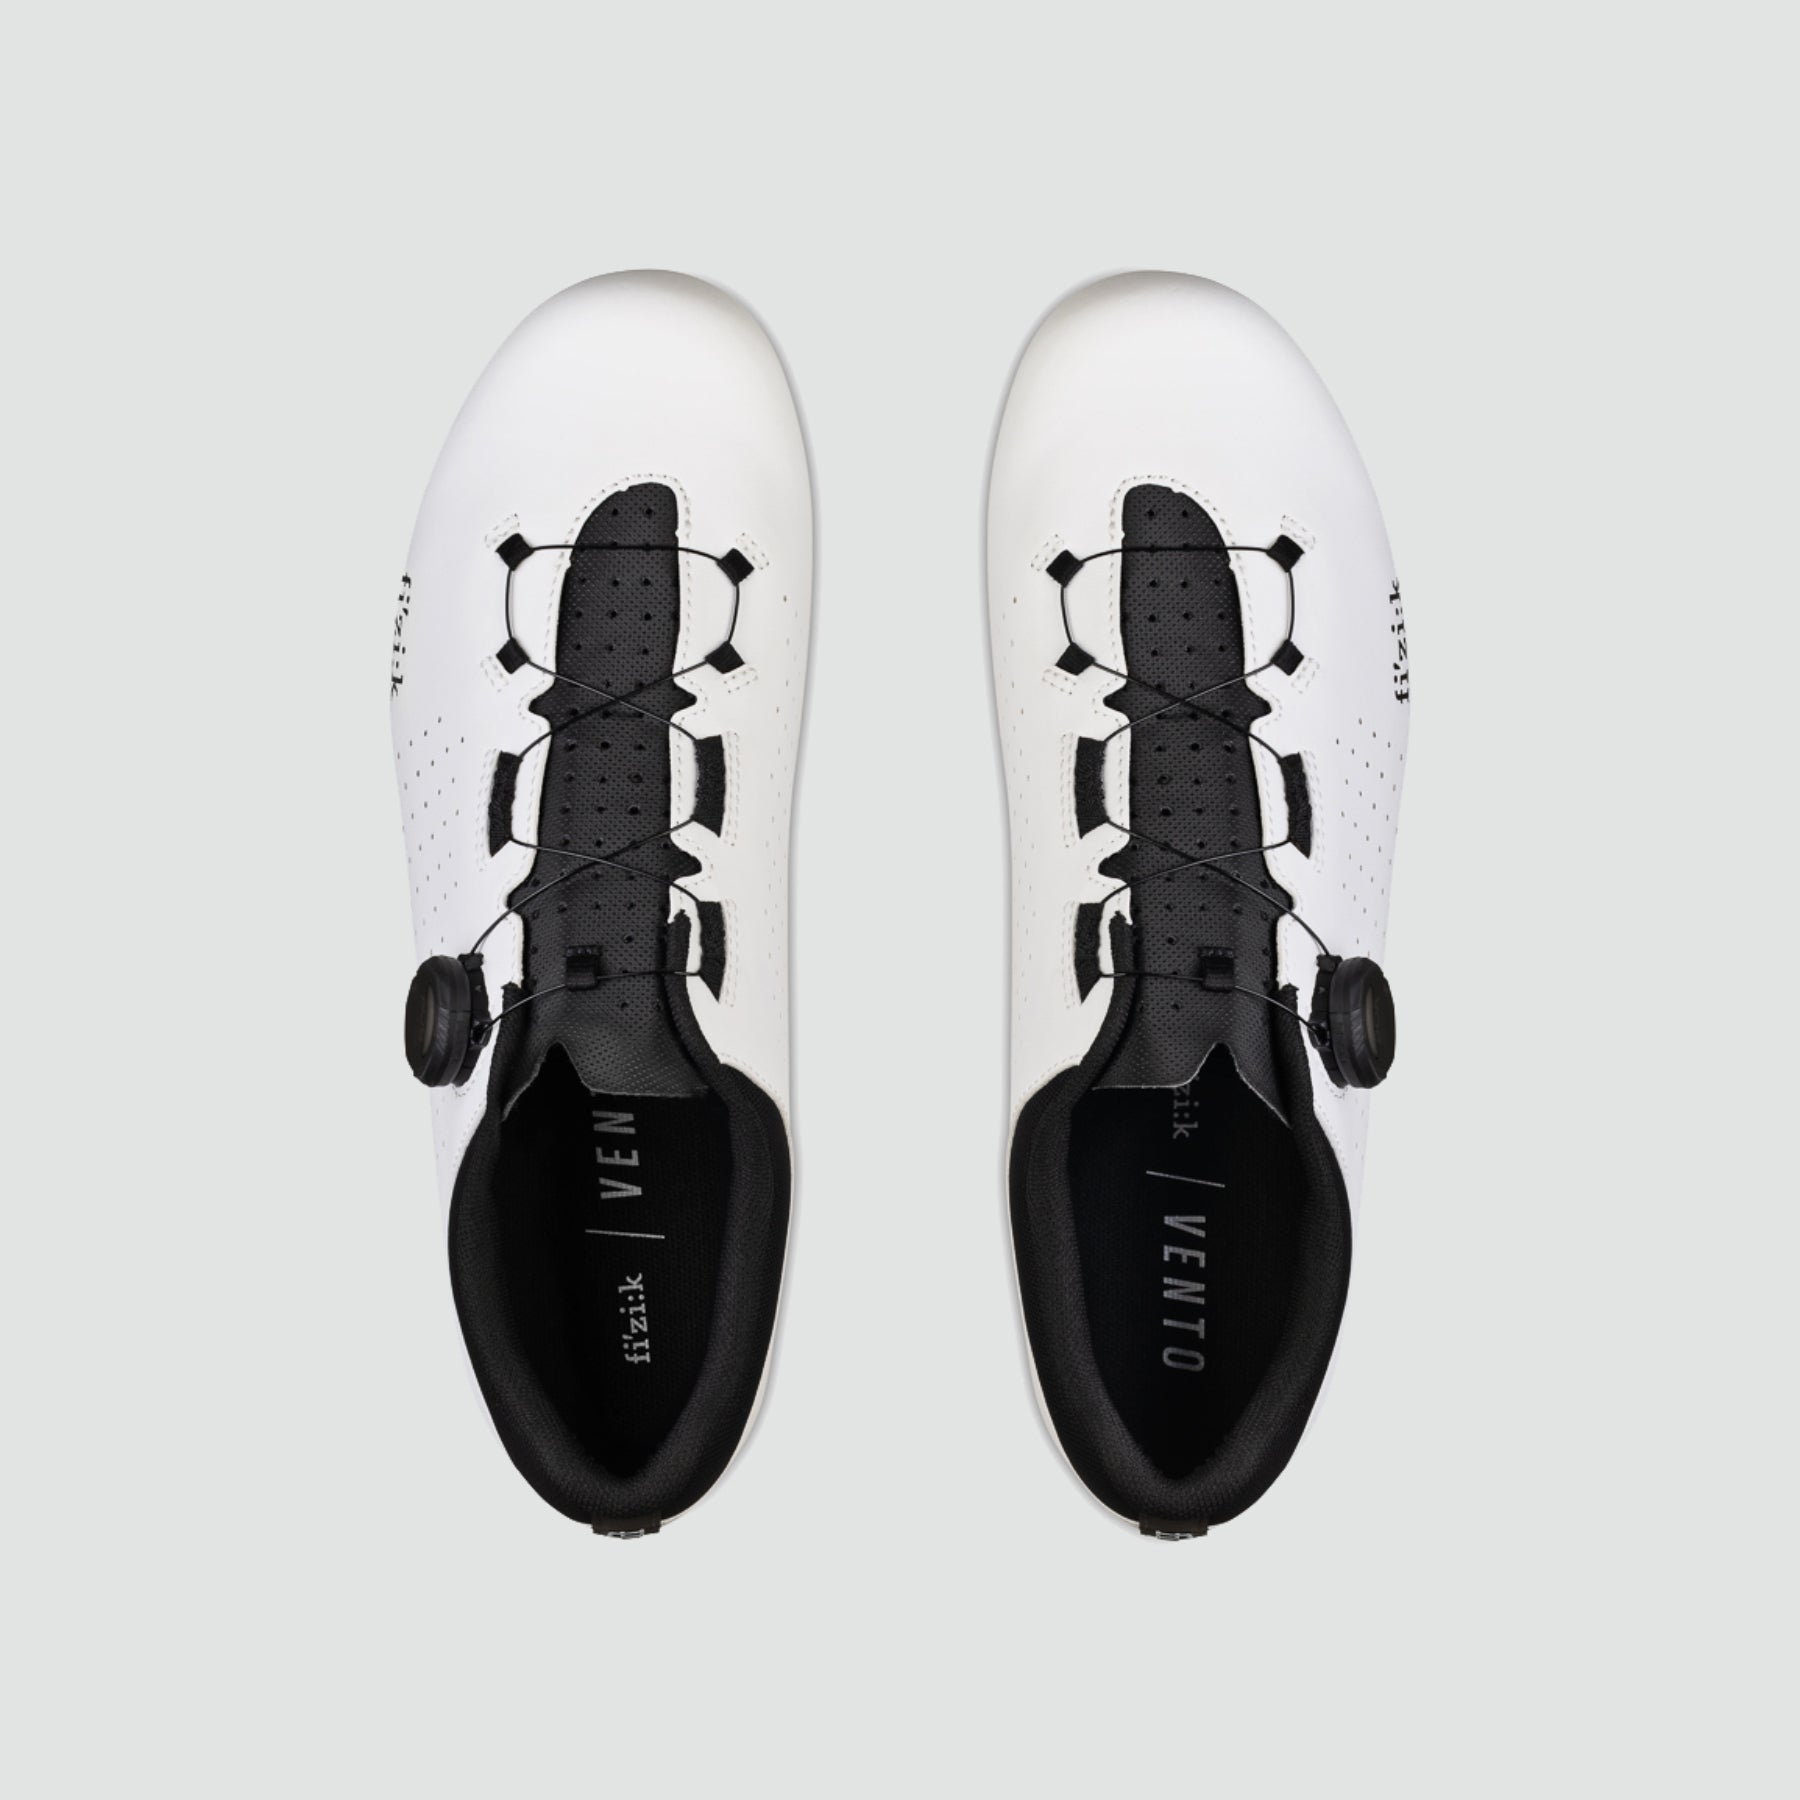 Chaussure Vento Omna - Blanc/Noir